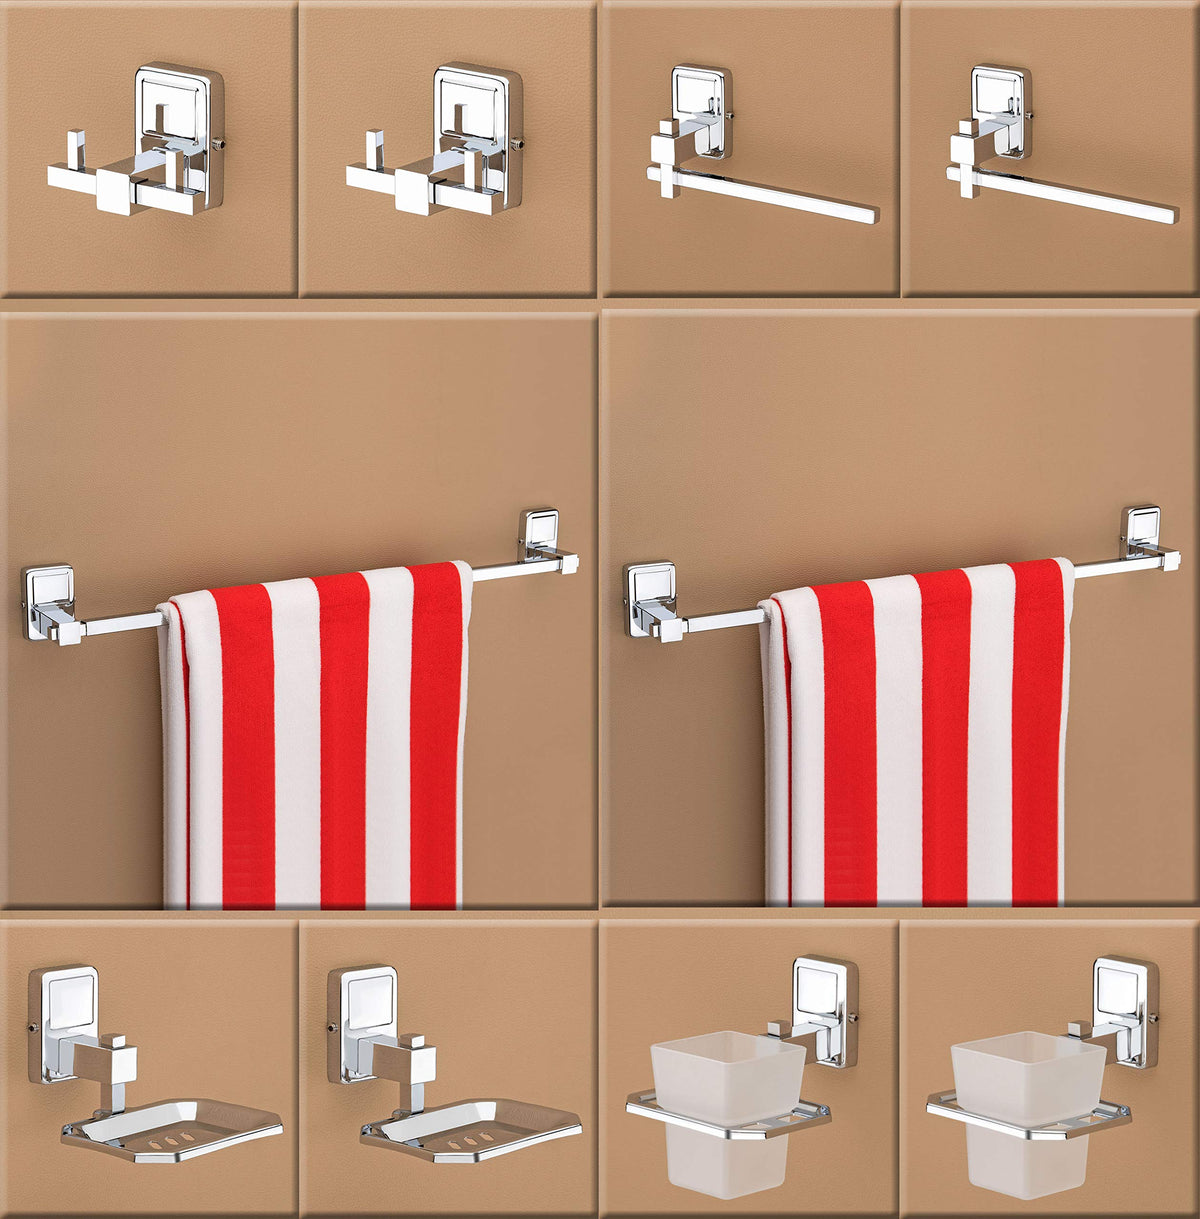 Plantex Stainless Steel 304 Grade Bathroom Accessories Set/Bathroom Hanger for Towel/Towel Bar/Napkin Ring/Tumbler Holder/Soap Dish/Robe Hook (Darcy - Pack of 10)